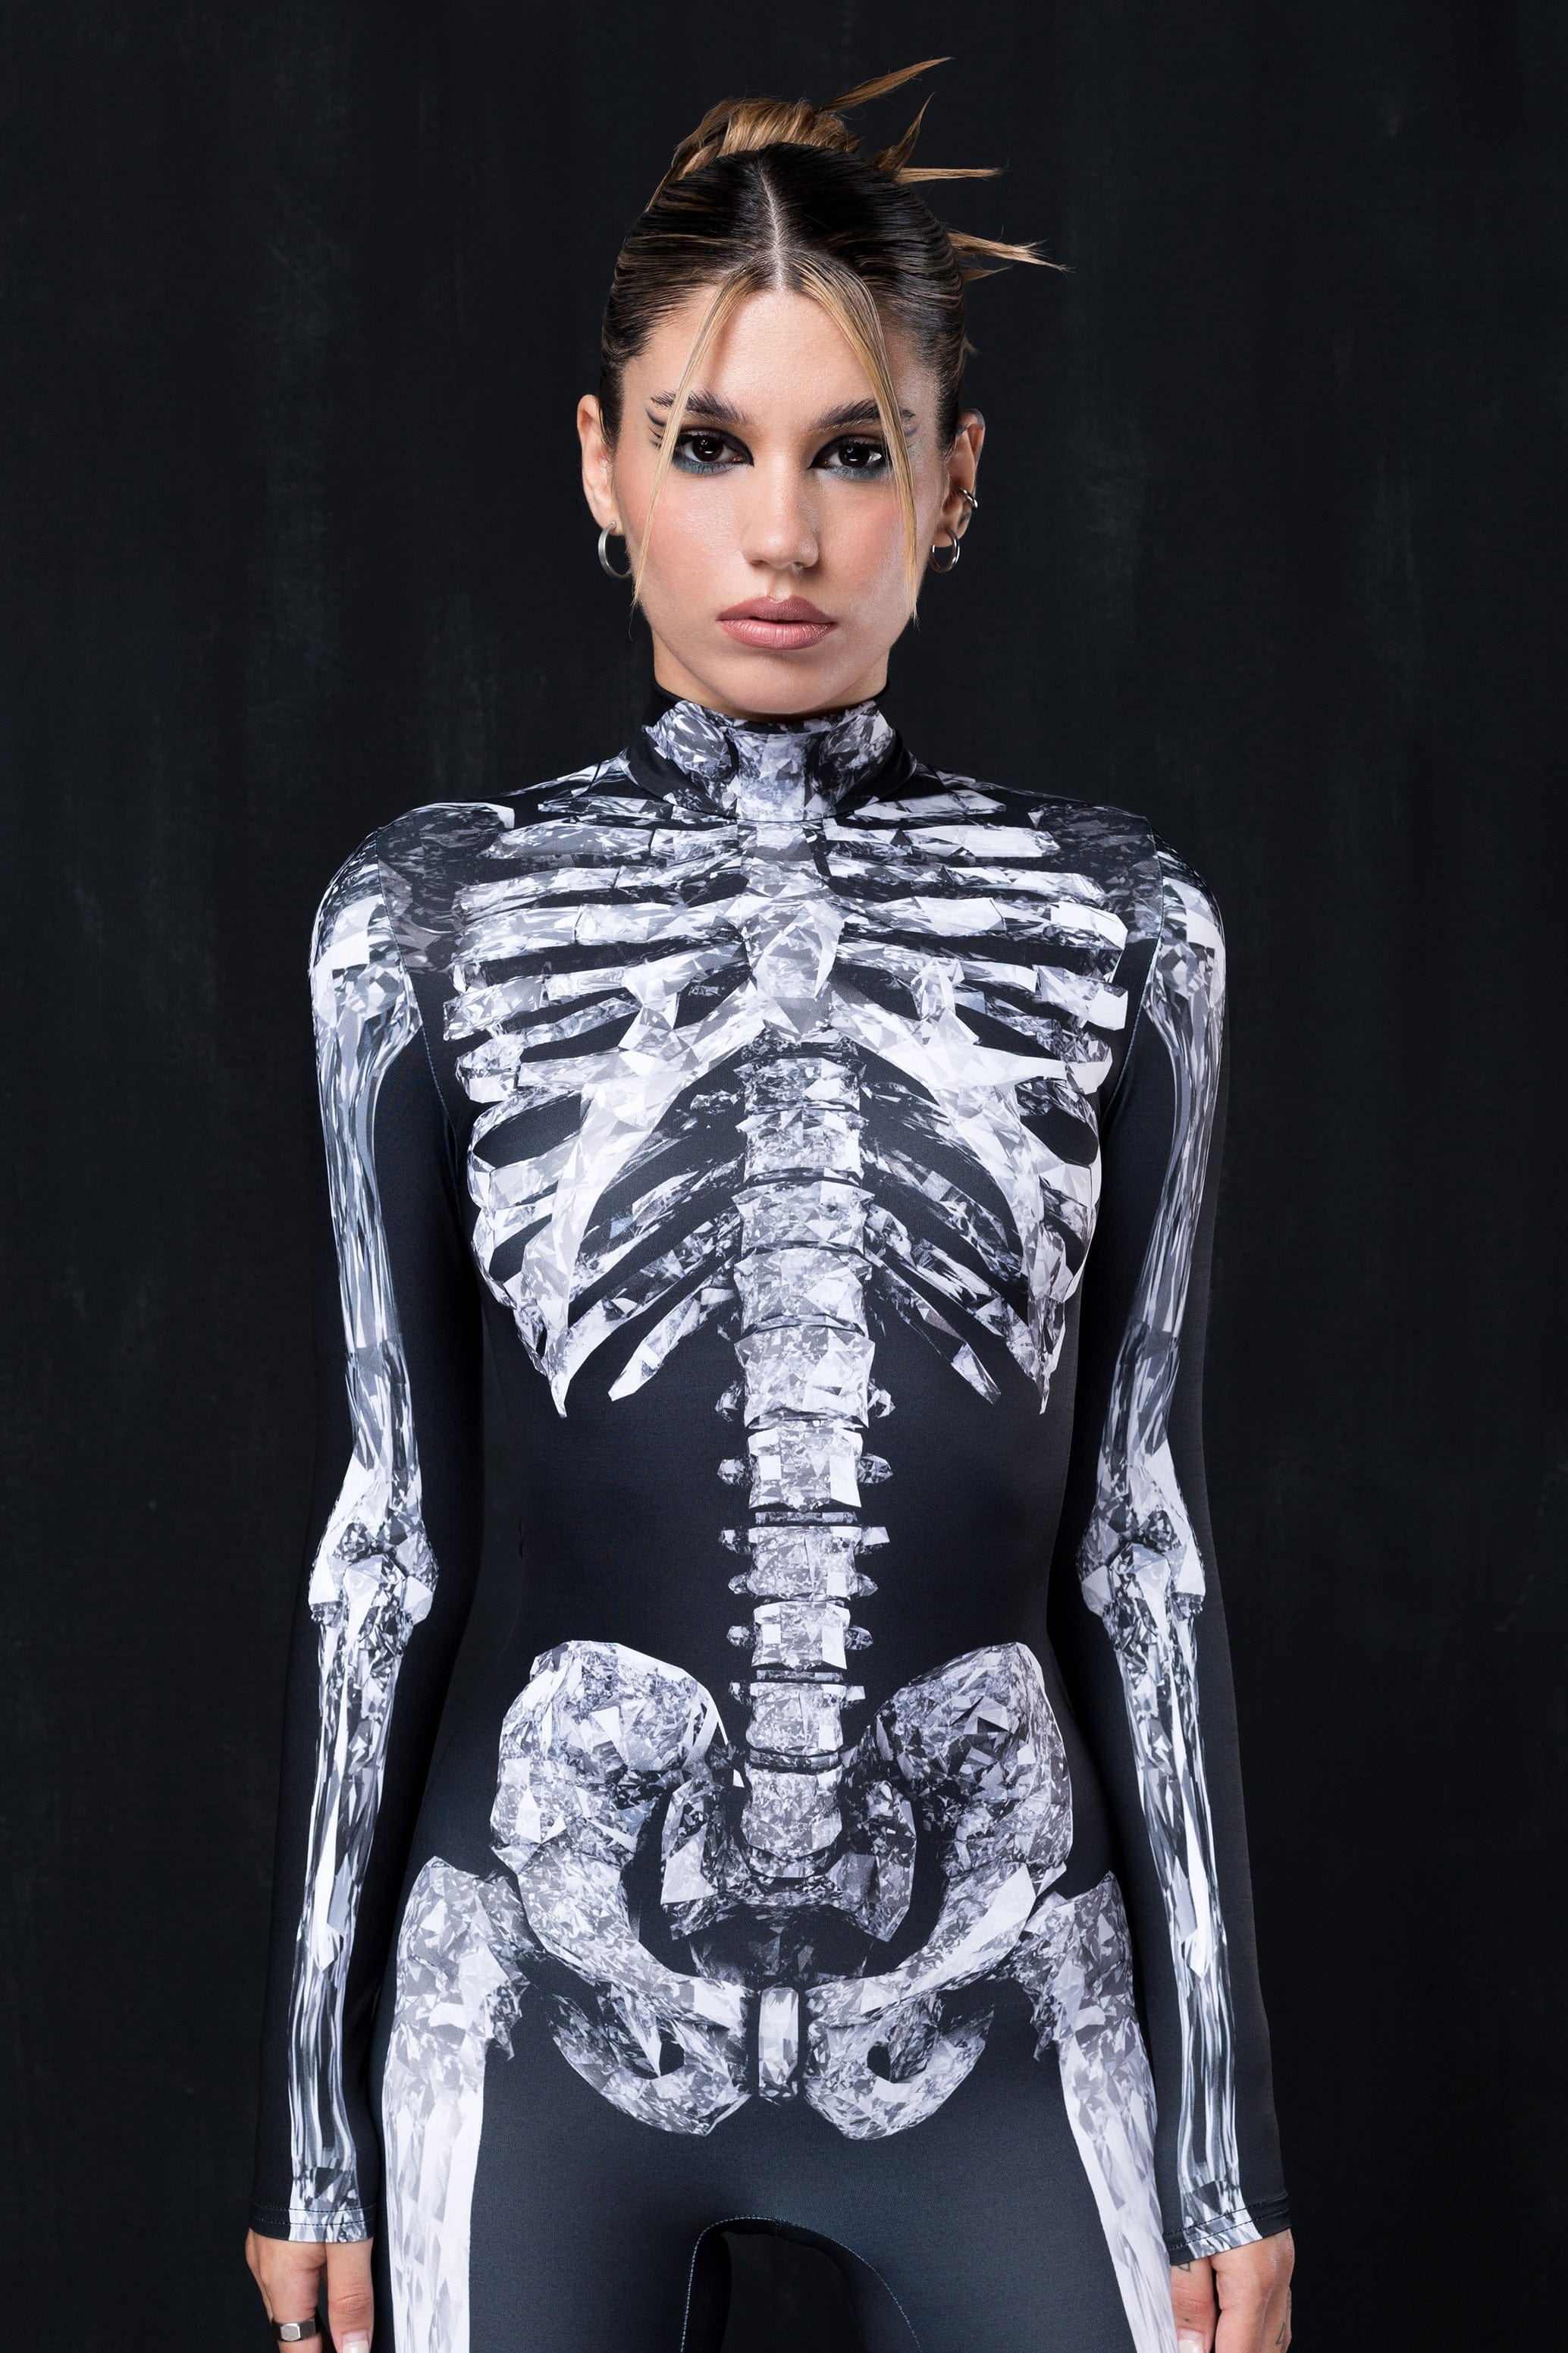 Diamond Skeleton Costume